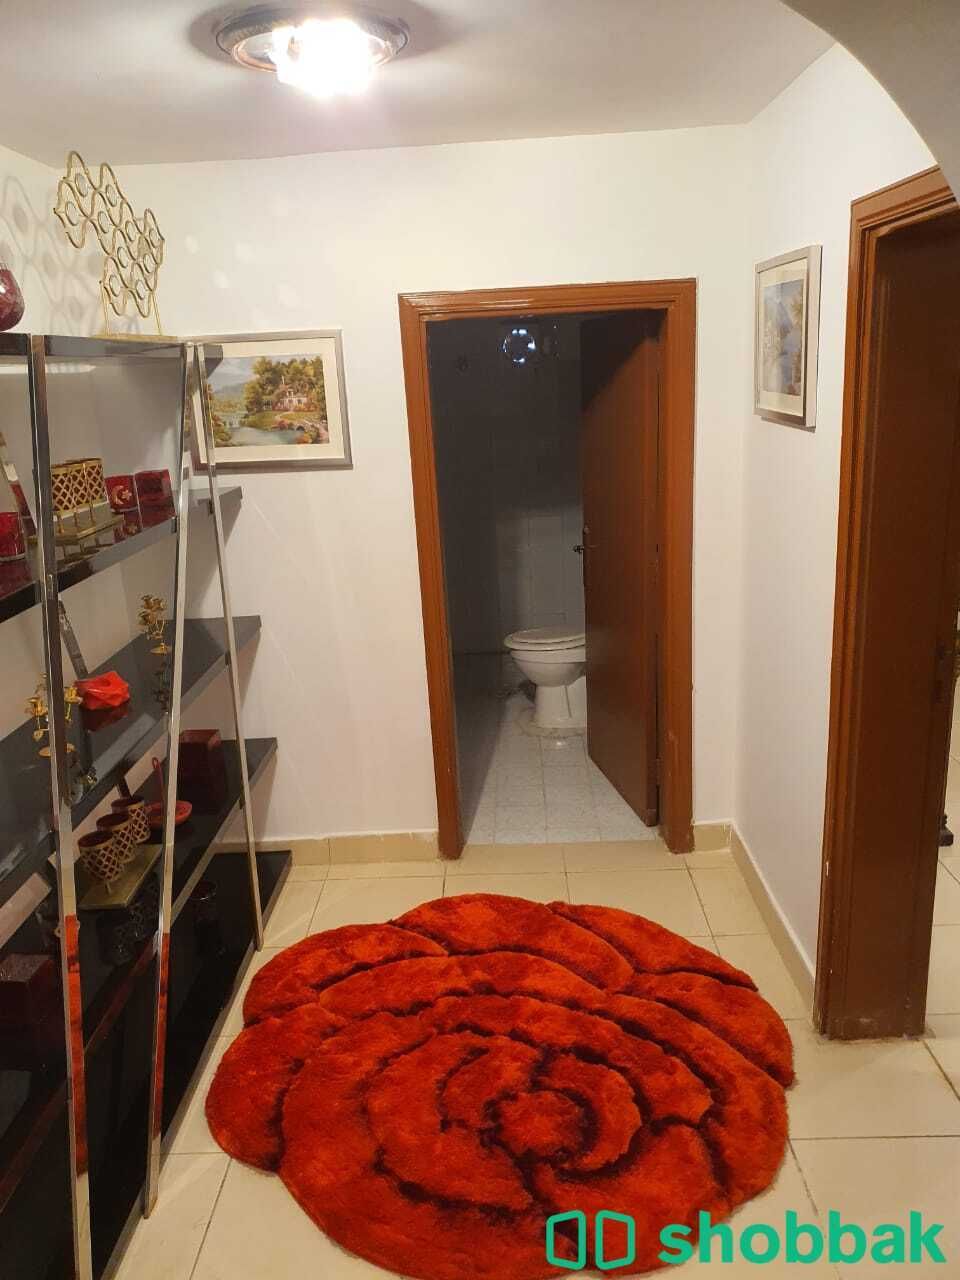 شقة للايجار غرفتين و صاله و حمام Shobbak Saudi Arabia